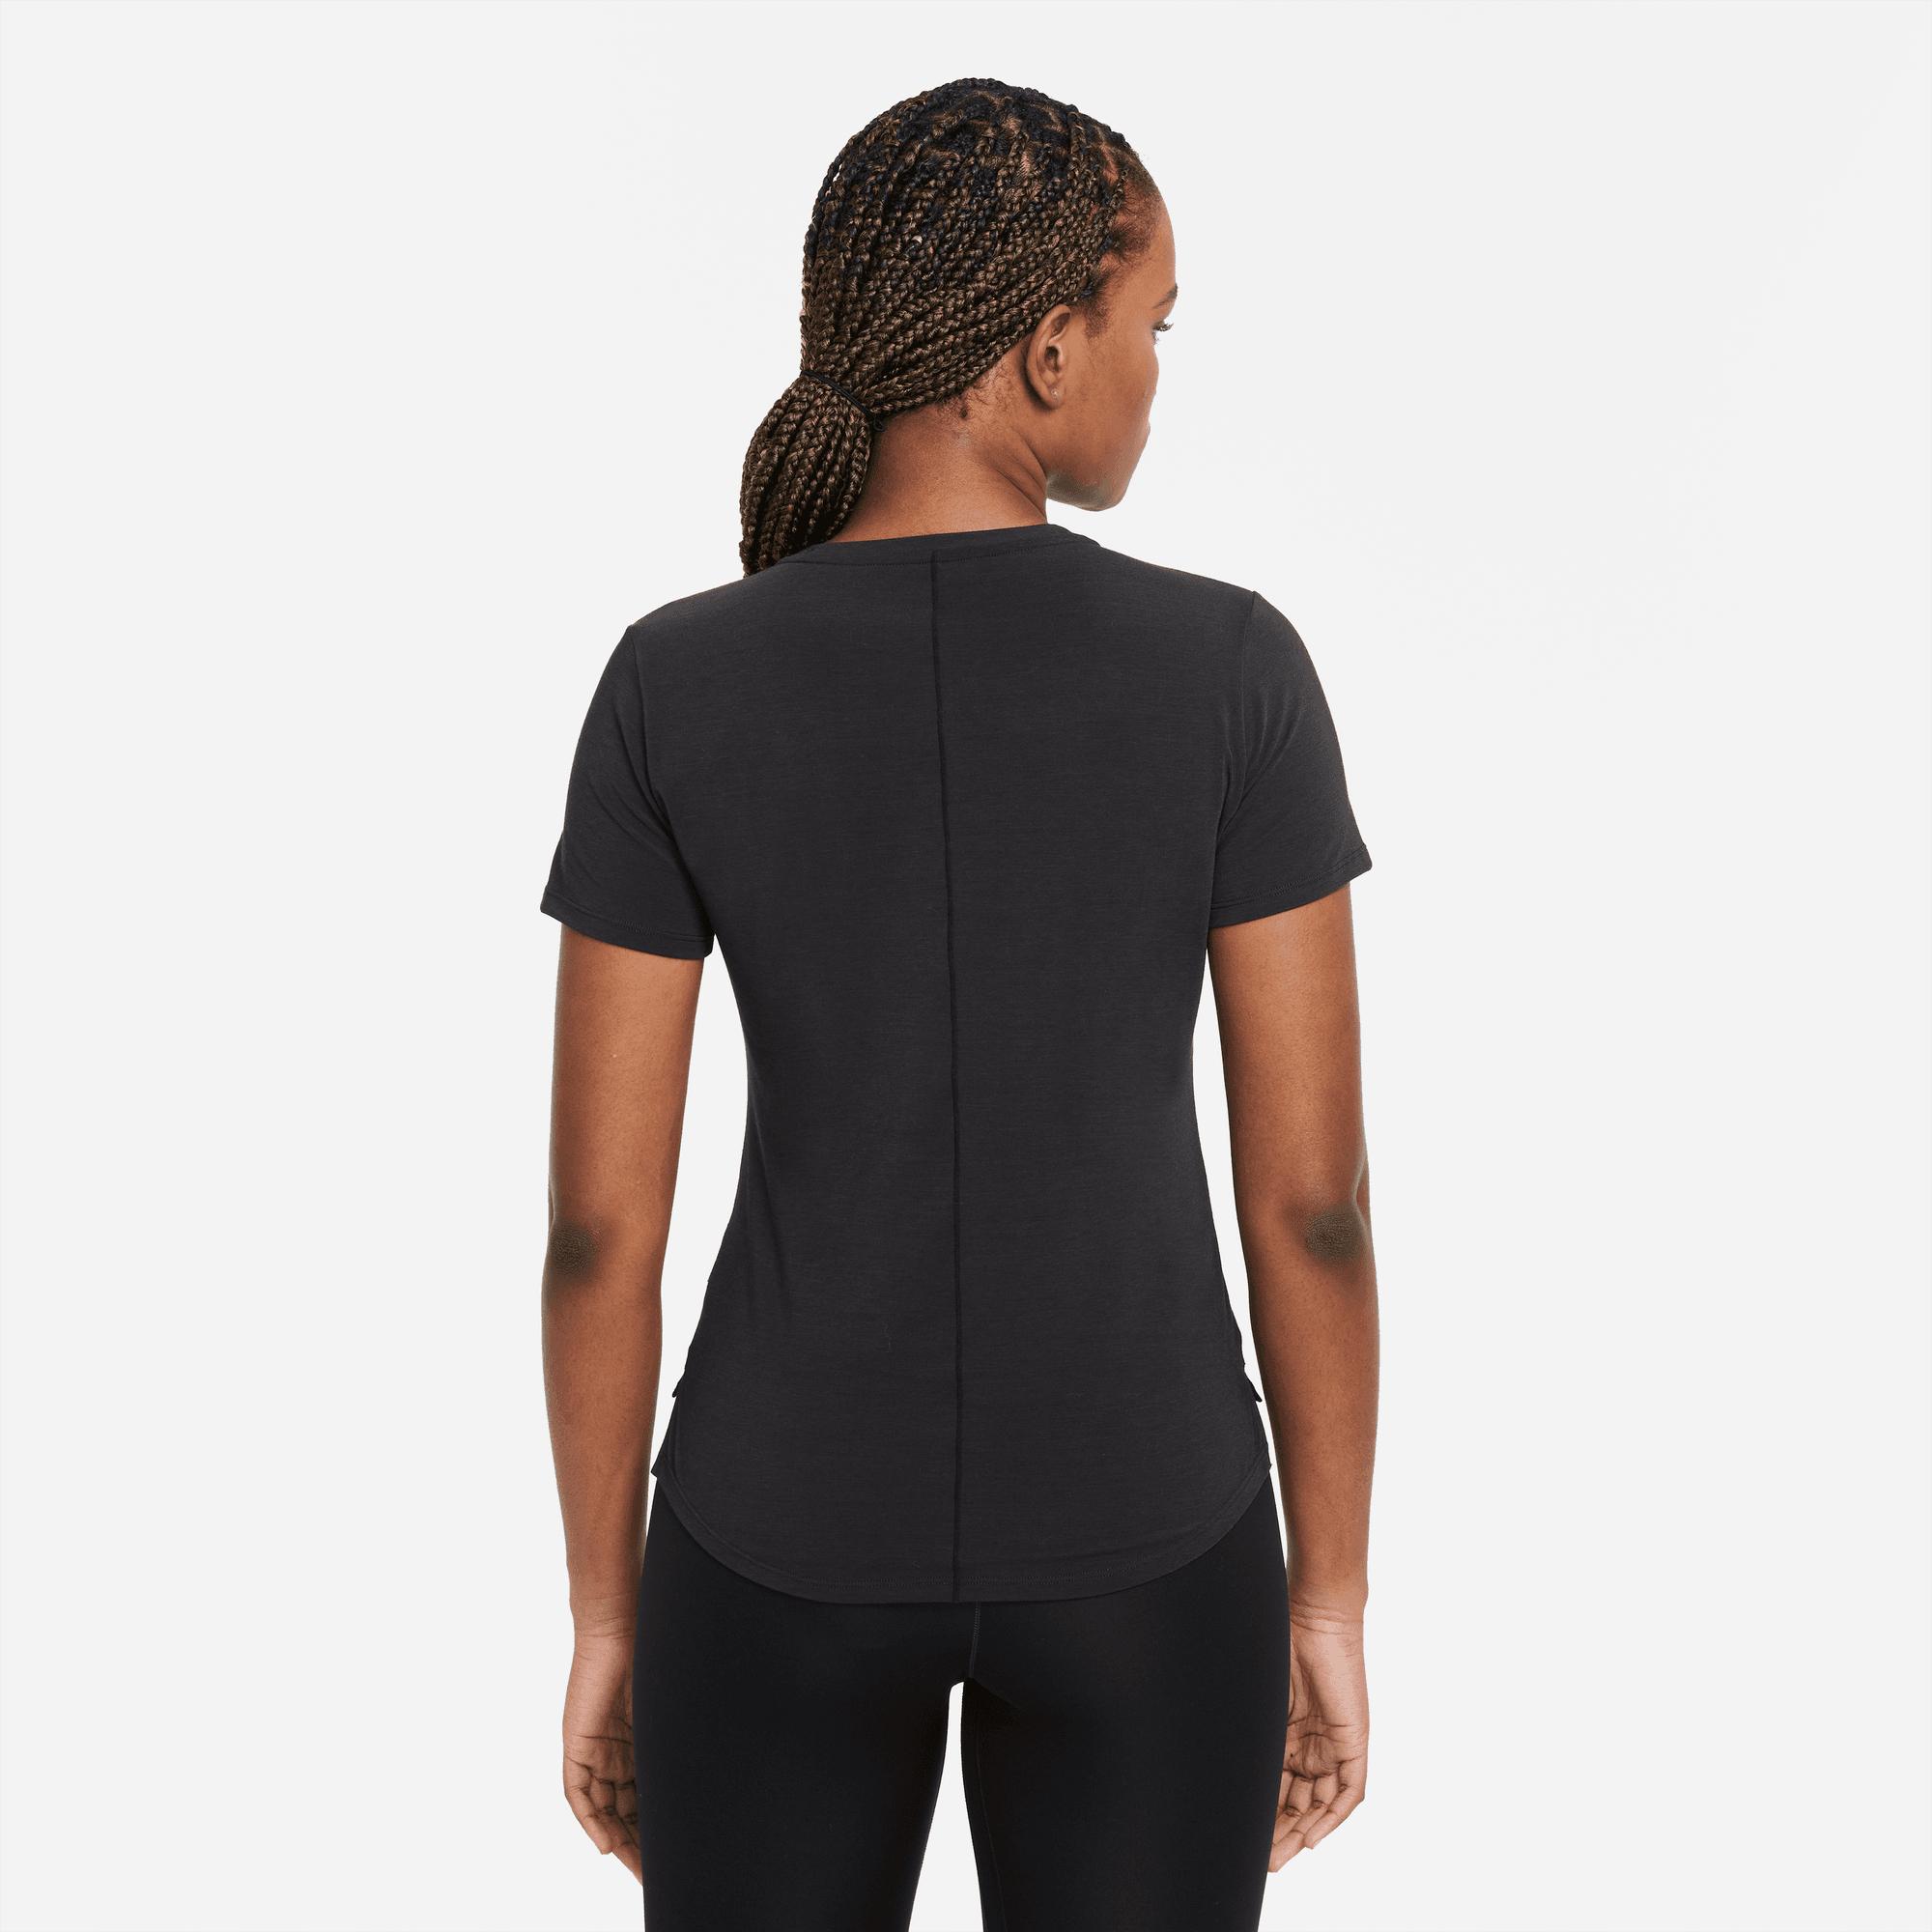 Nike Women`s Dri-FIT UV One Luxe Standard Fit Short-Sleeve Top